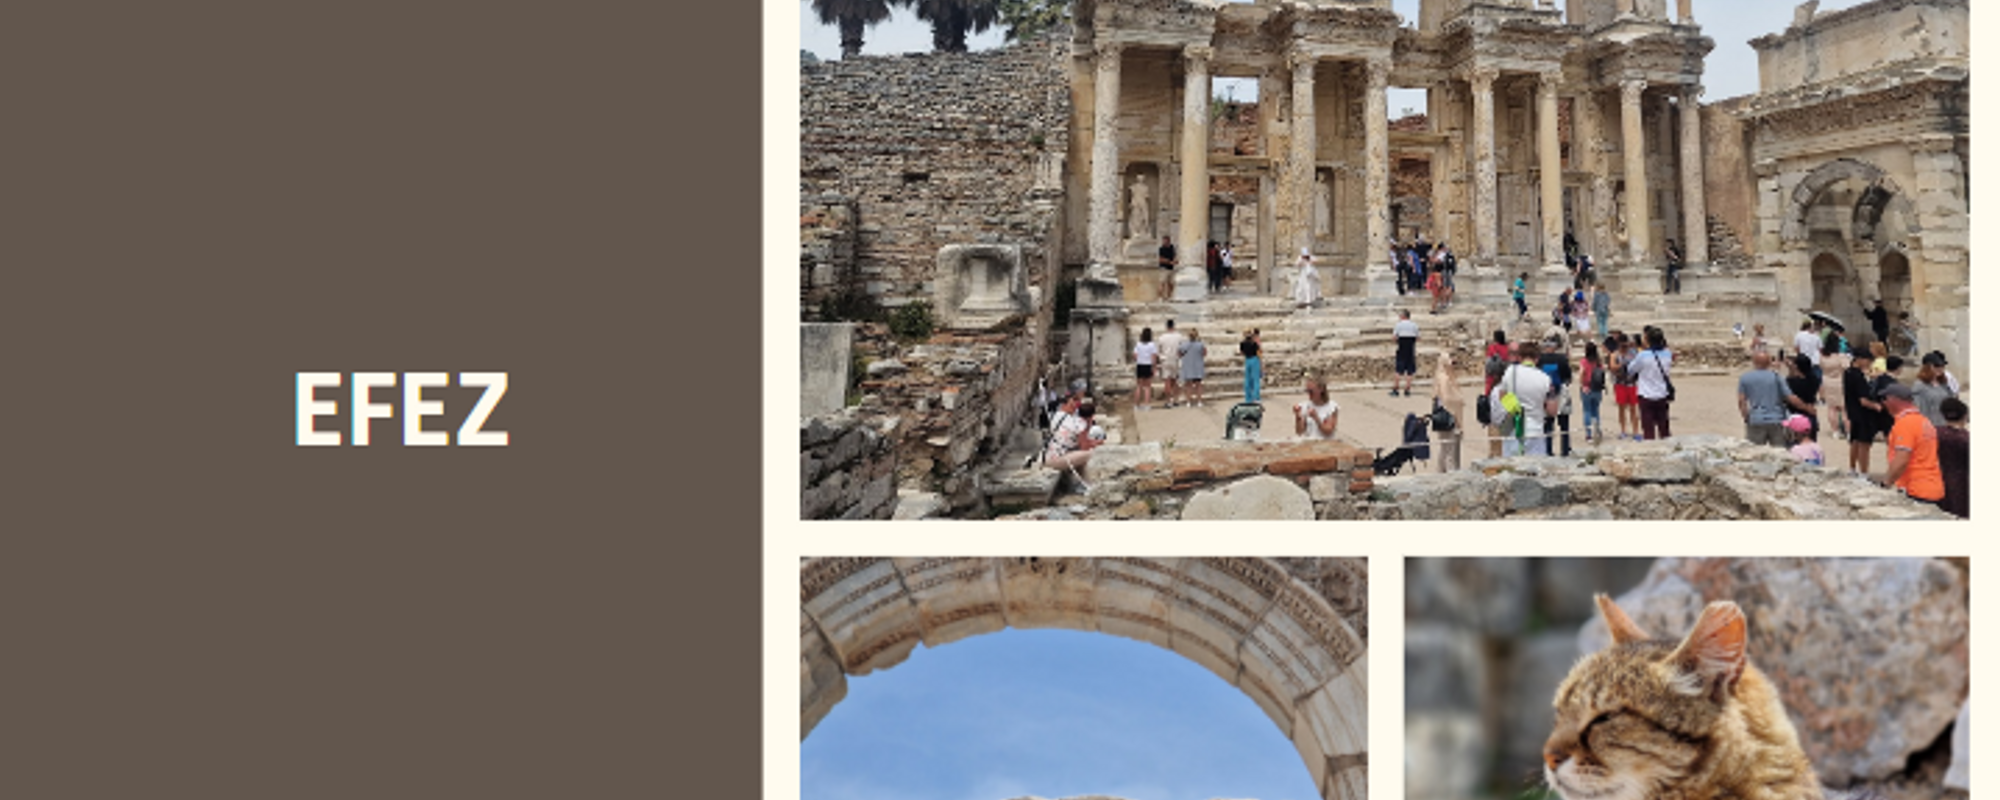 [PL / ENG] Efez: milion zdjęć, 3 miliony ludzi / Ephesus: one million photos, three million people